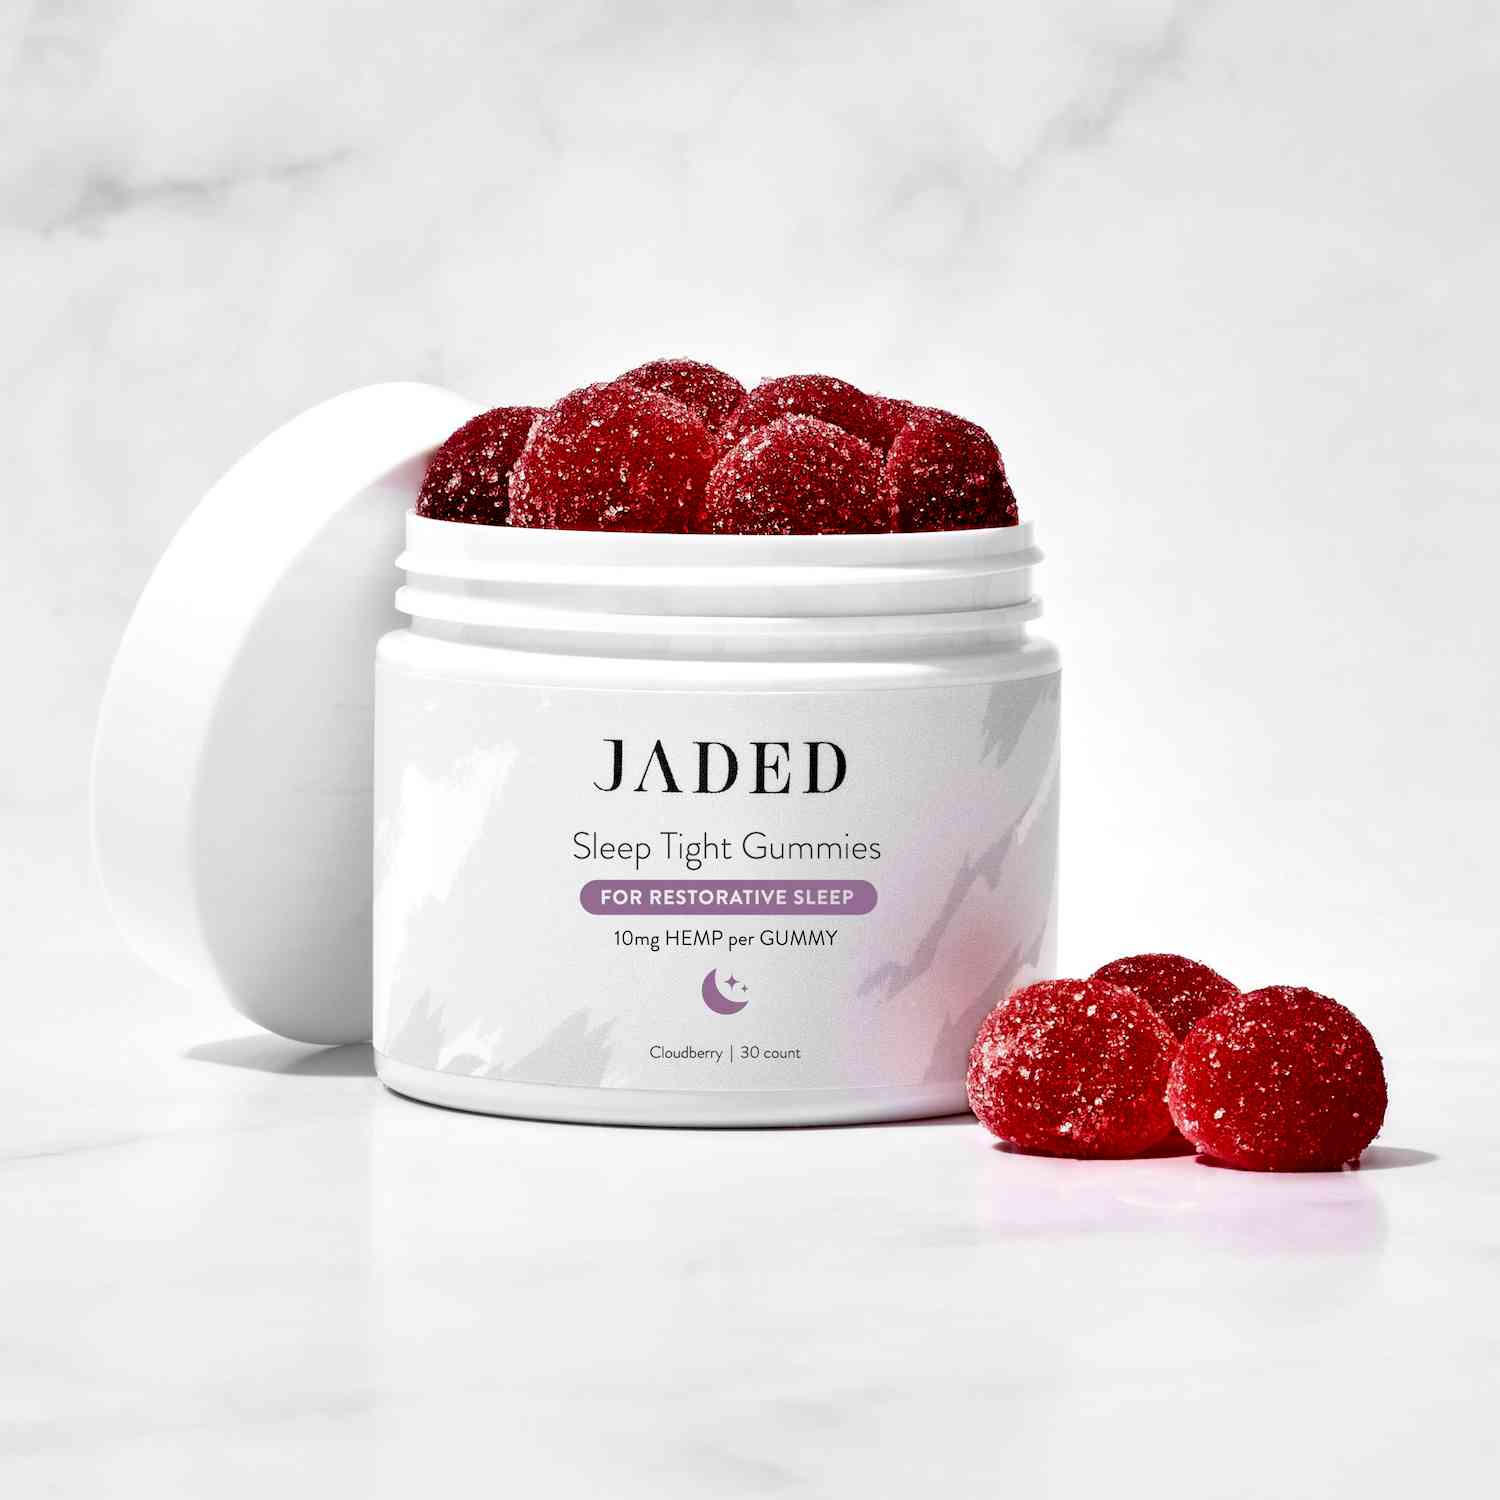 JADED Vegan Hemp Sleep Tight Gummies 30ct for Deep Sleep, Cloudberry Flavor